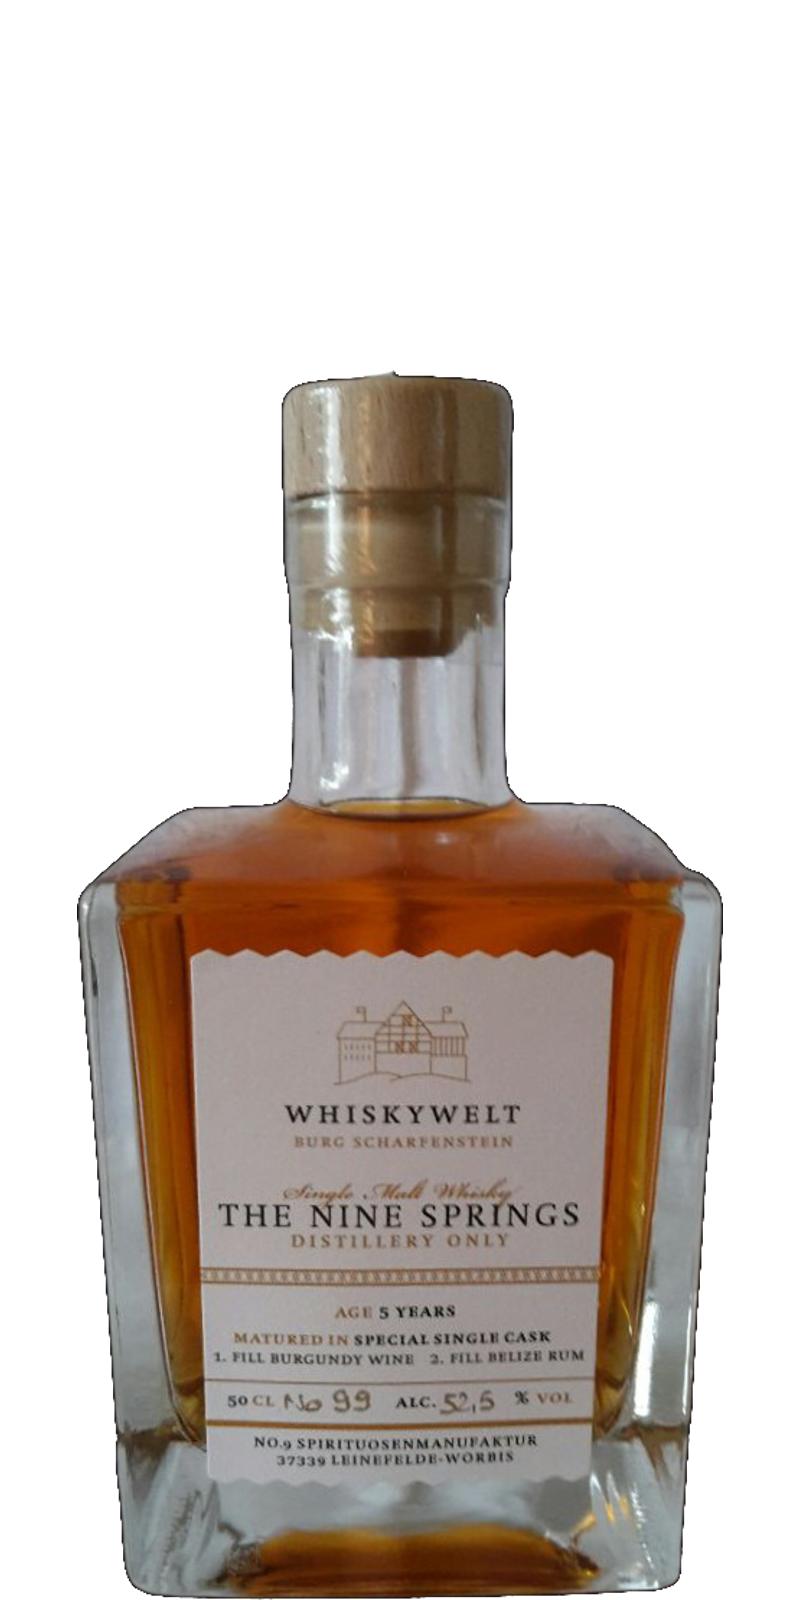 The Nine Springs 5yo Whiskywelt Burg Scharfenstein handfilled 52.5% 500ml